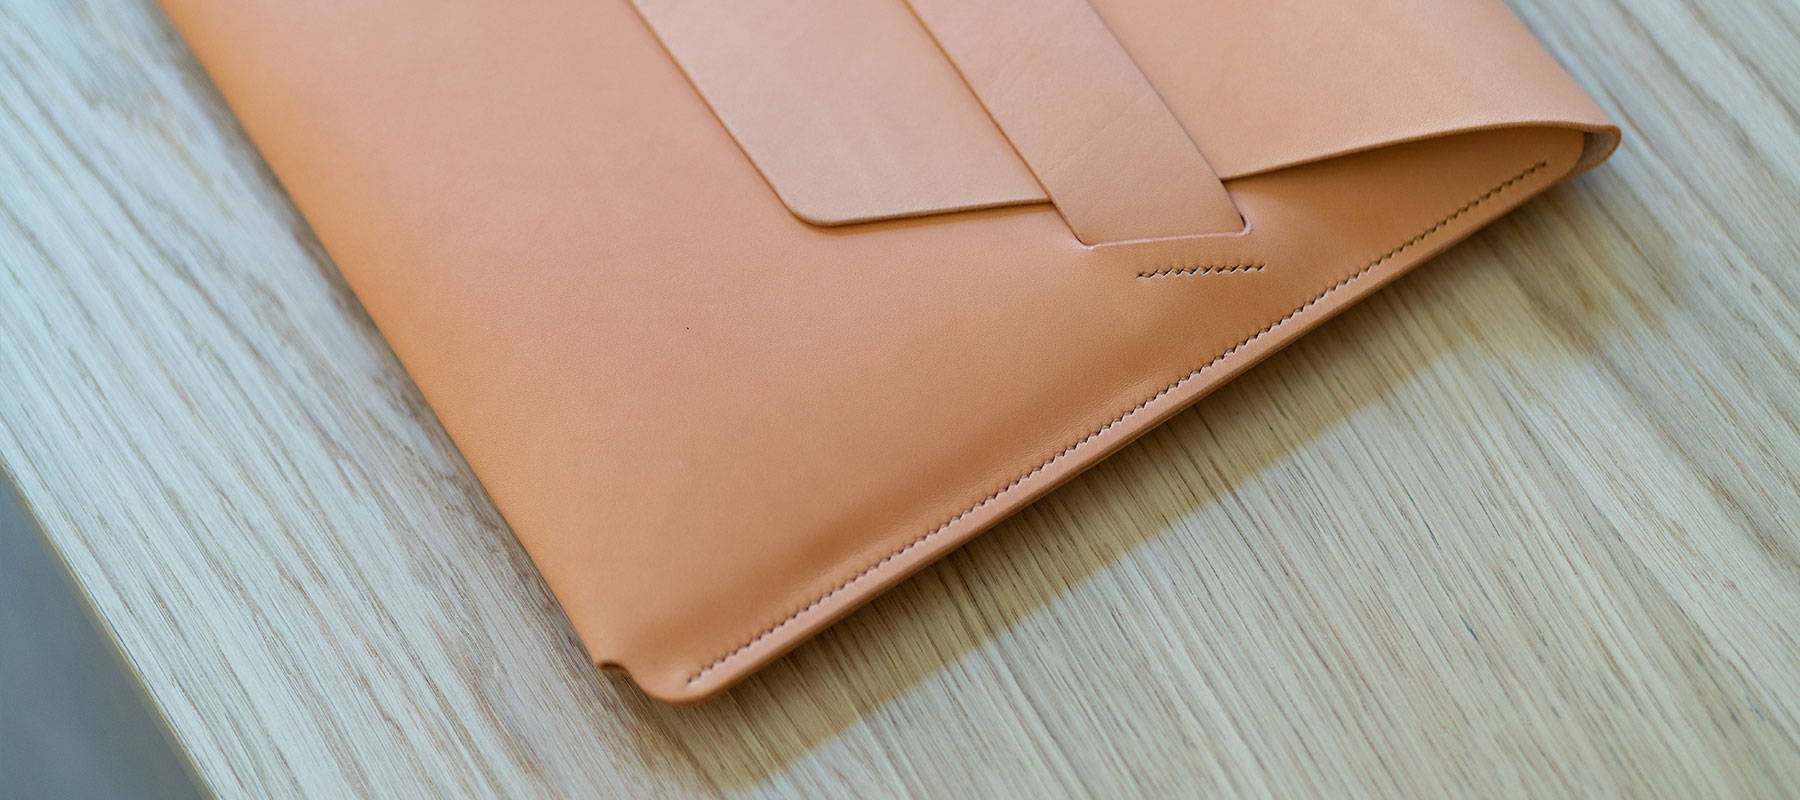 MacBook Leation Sleeve Detalhe Atelier Madre Manuel Dreesmann Barcelona